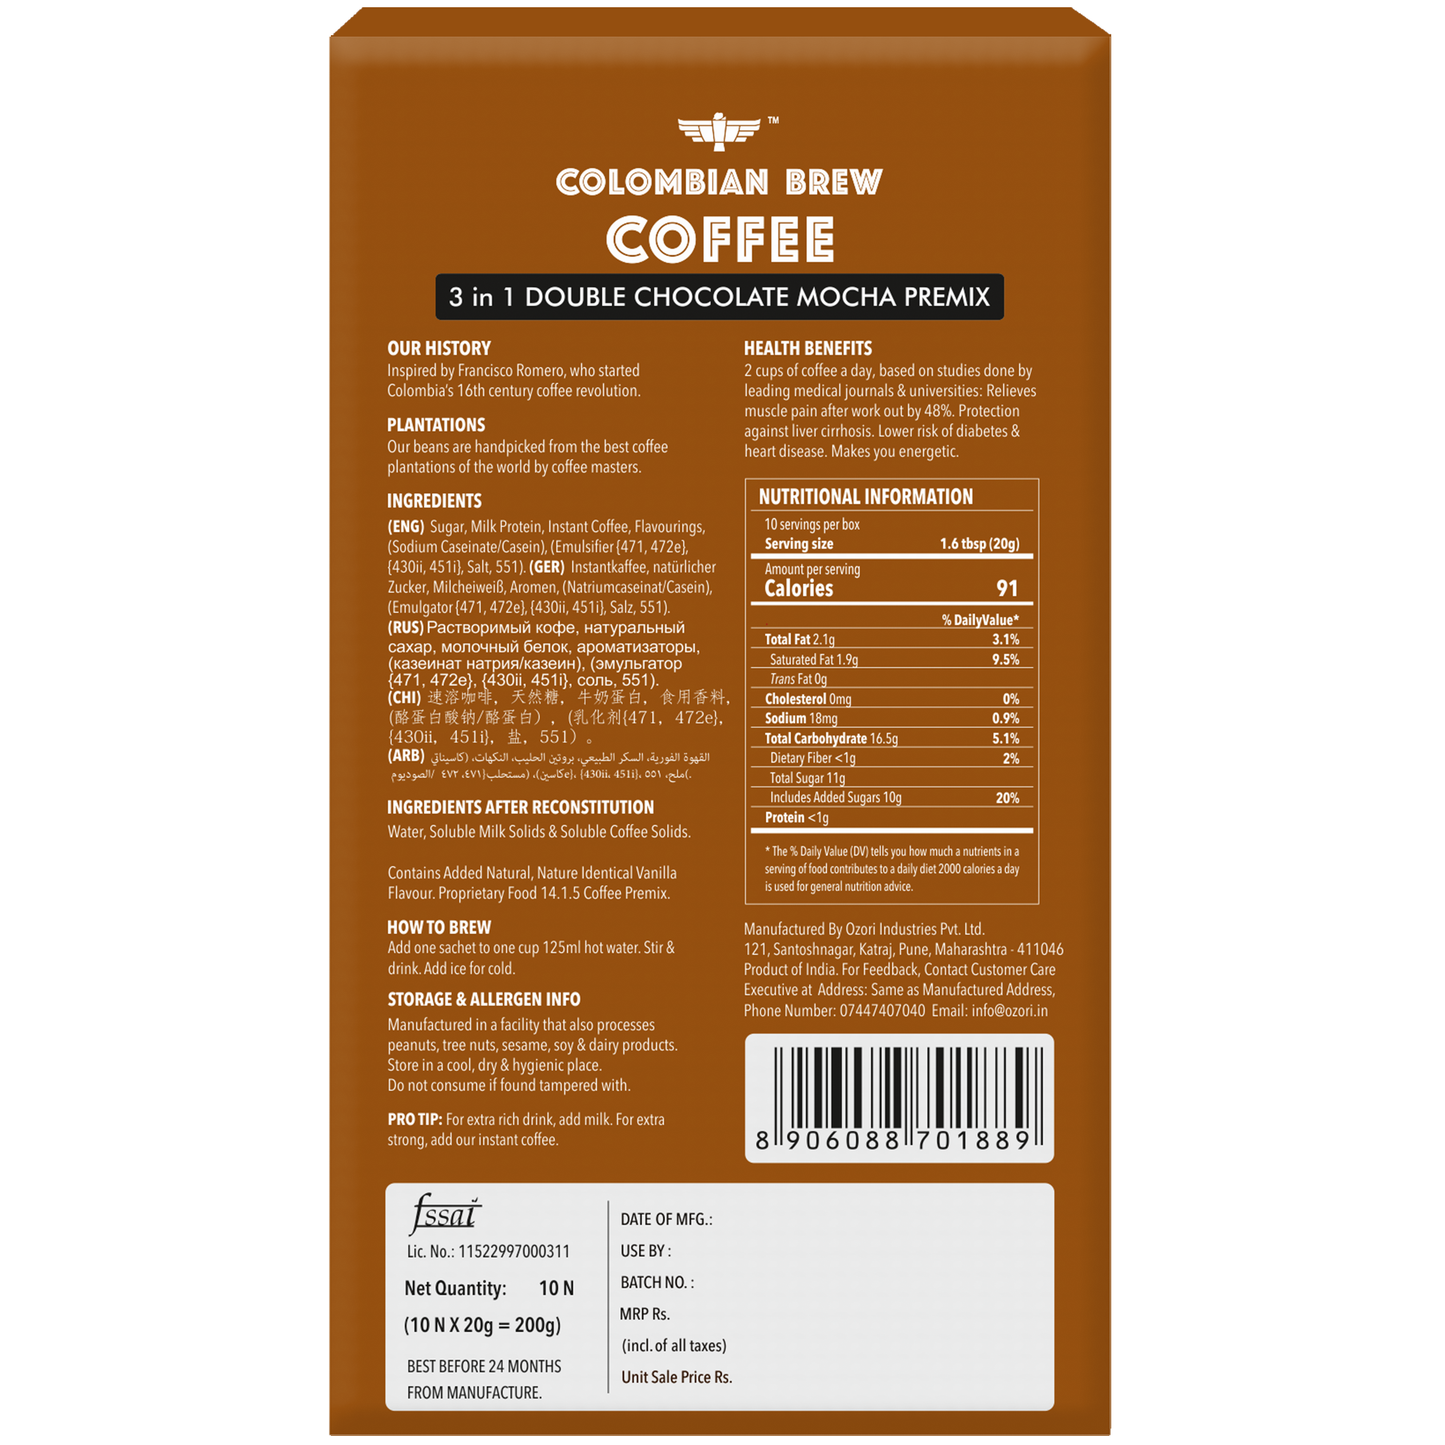 Double Chocolate Mocha Café Latte, Instant Coffee Powder Premix (3 in 1), 10 Sachets Box 